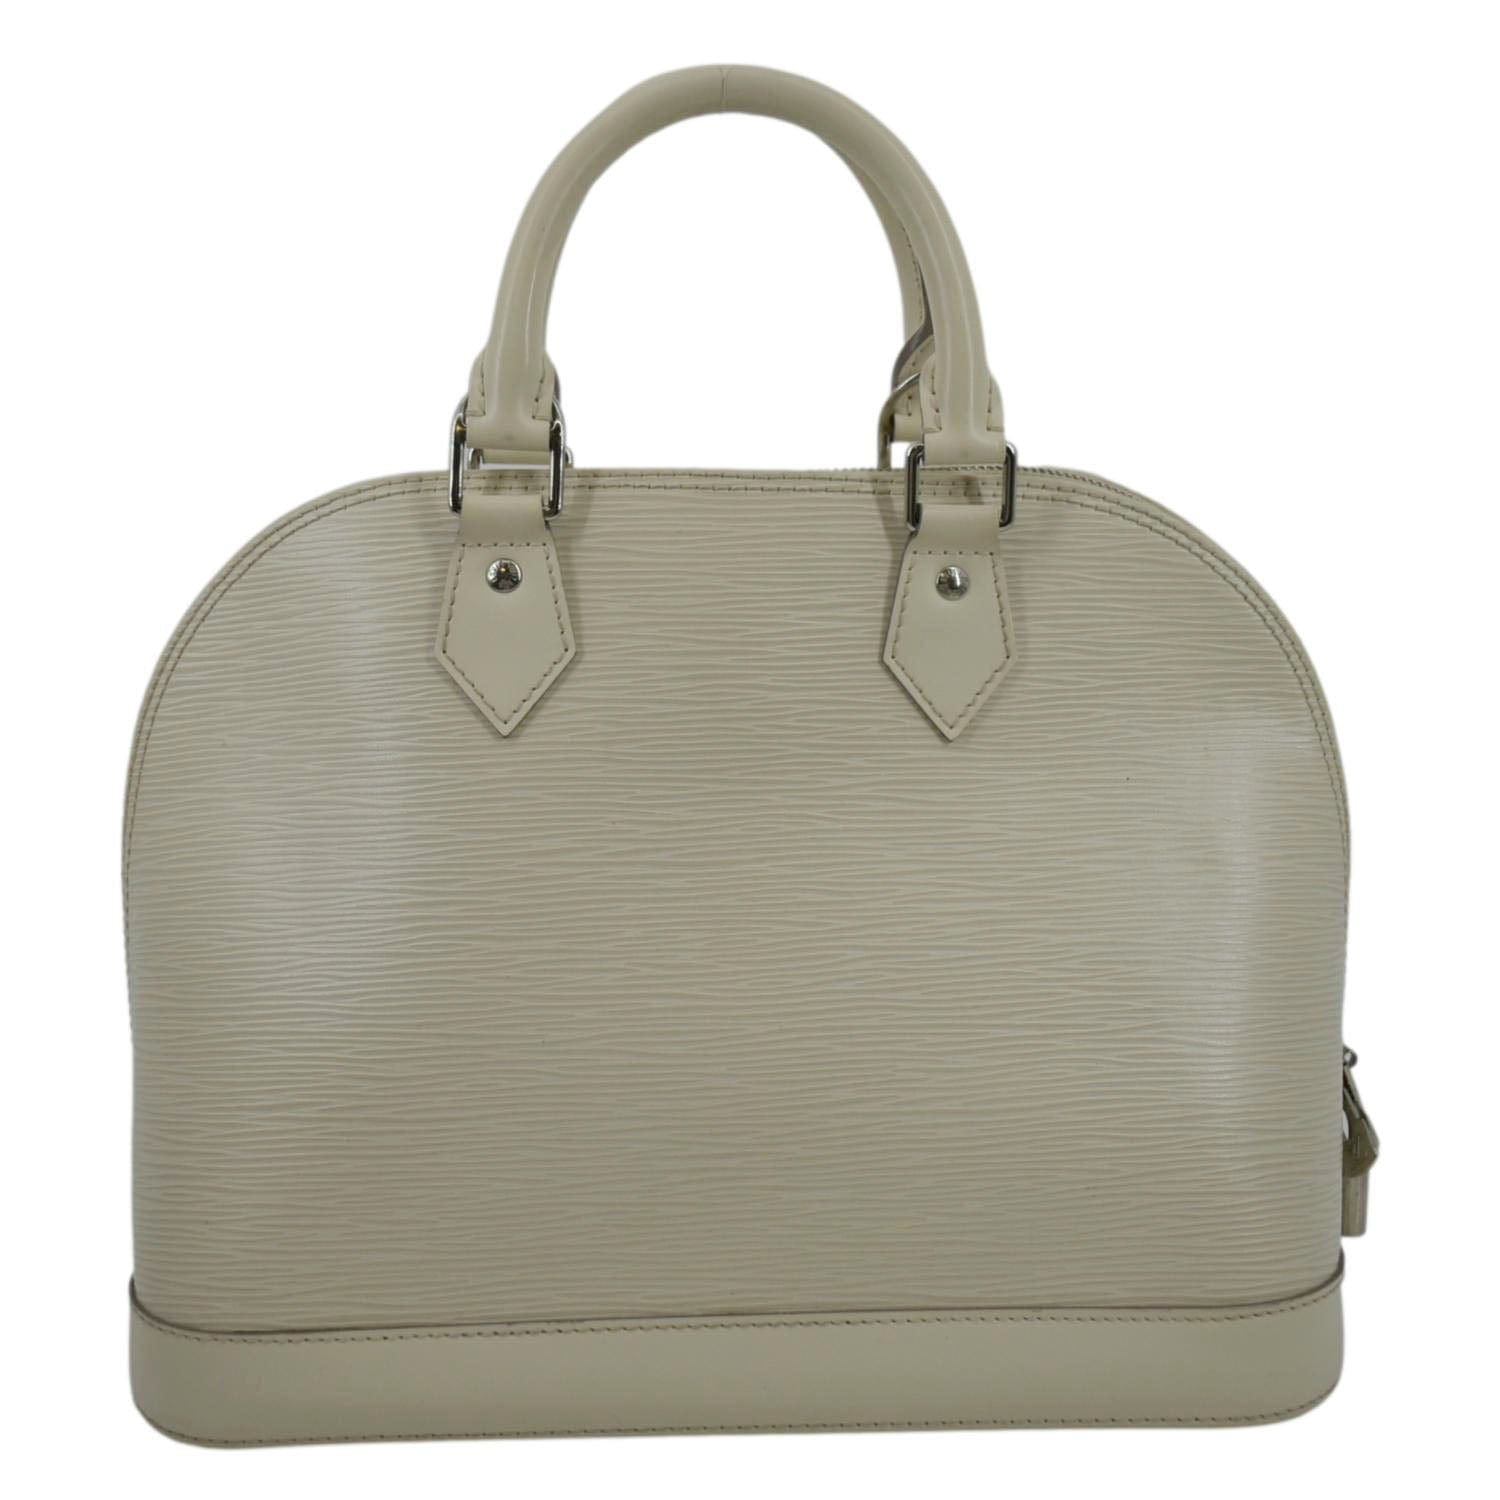 Alma PM Epi Leather - Handbags